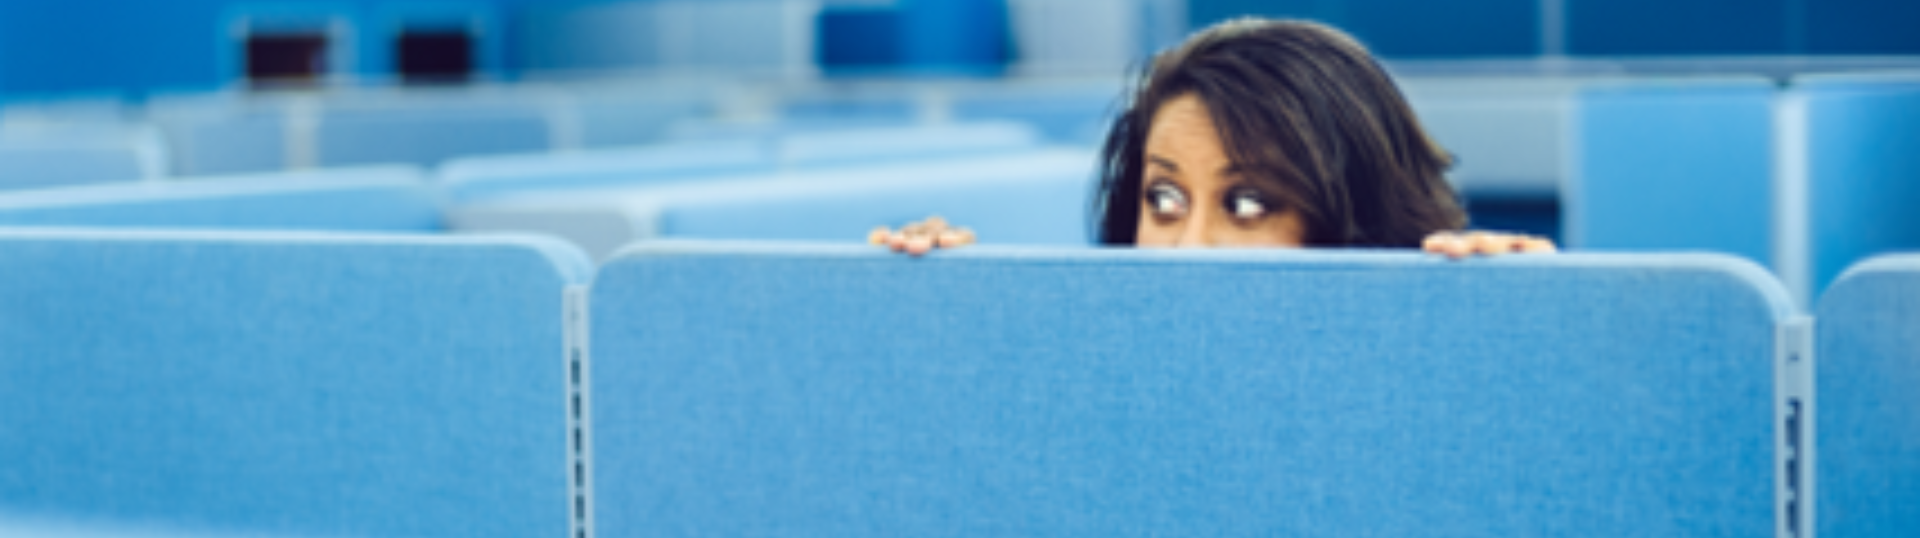 A woman hidden in an office cubicle